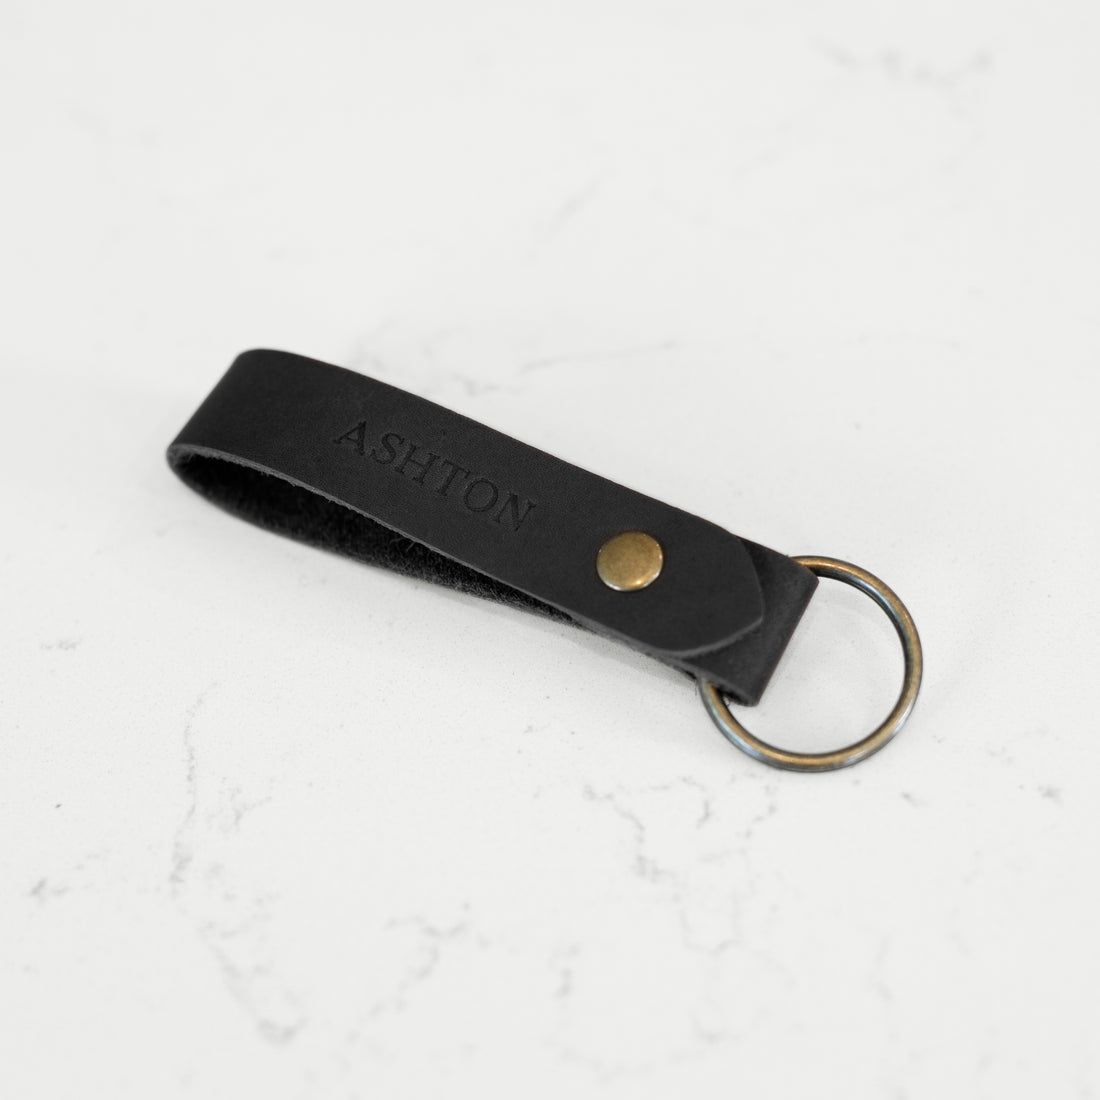 NorthwindSupply Personalized Leather Keychain